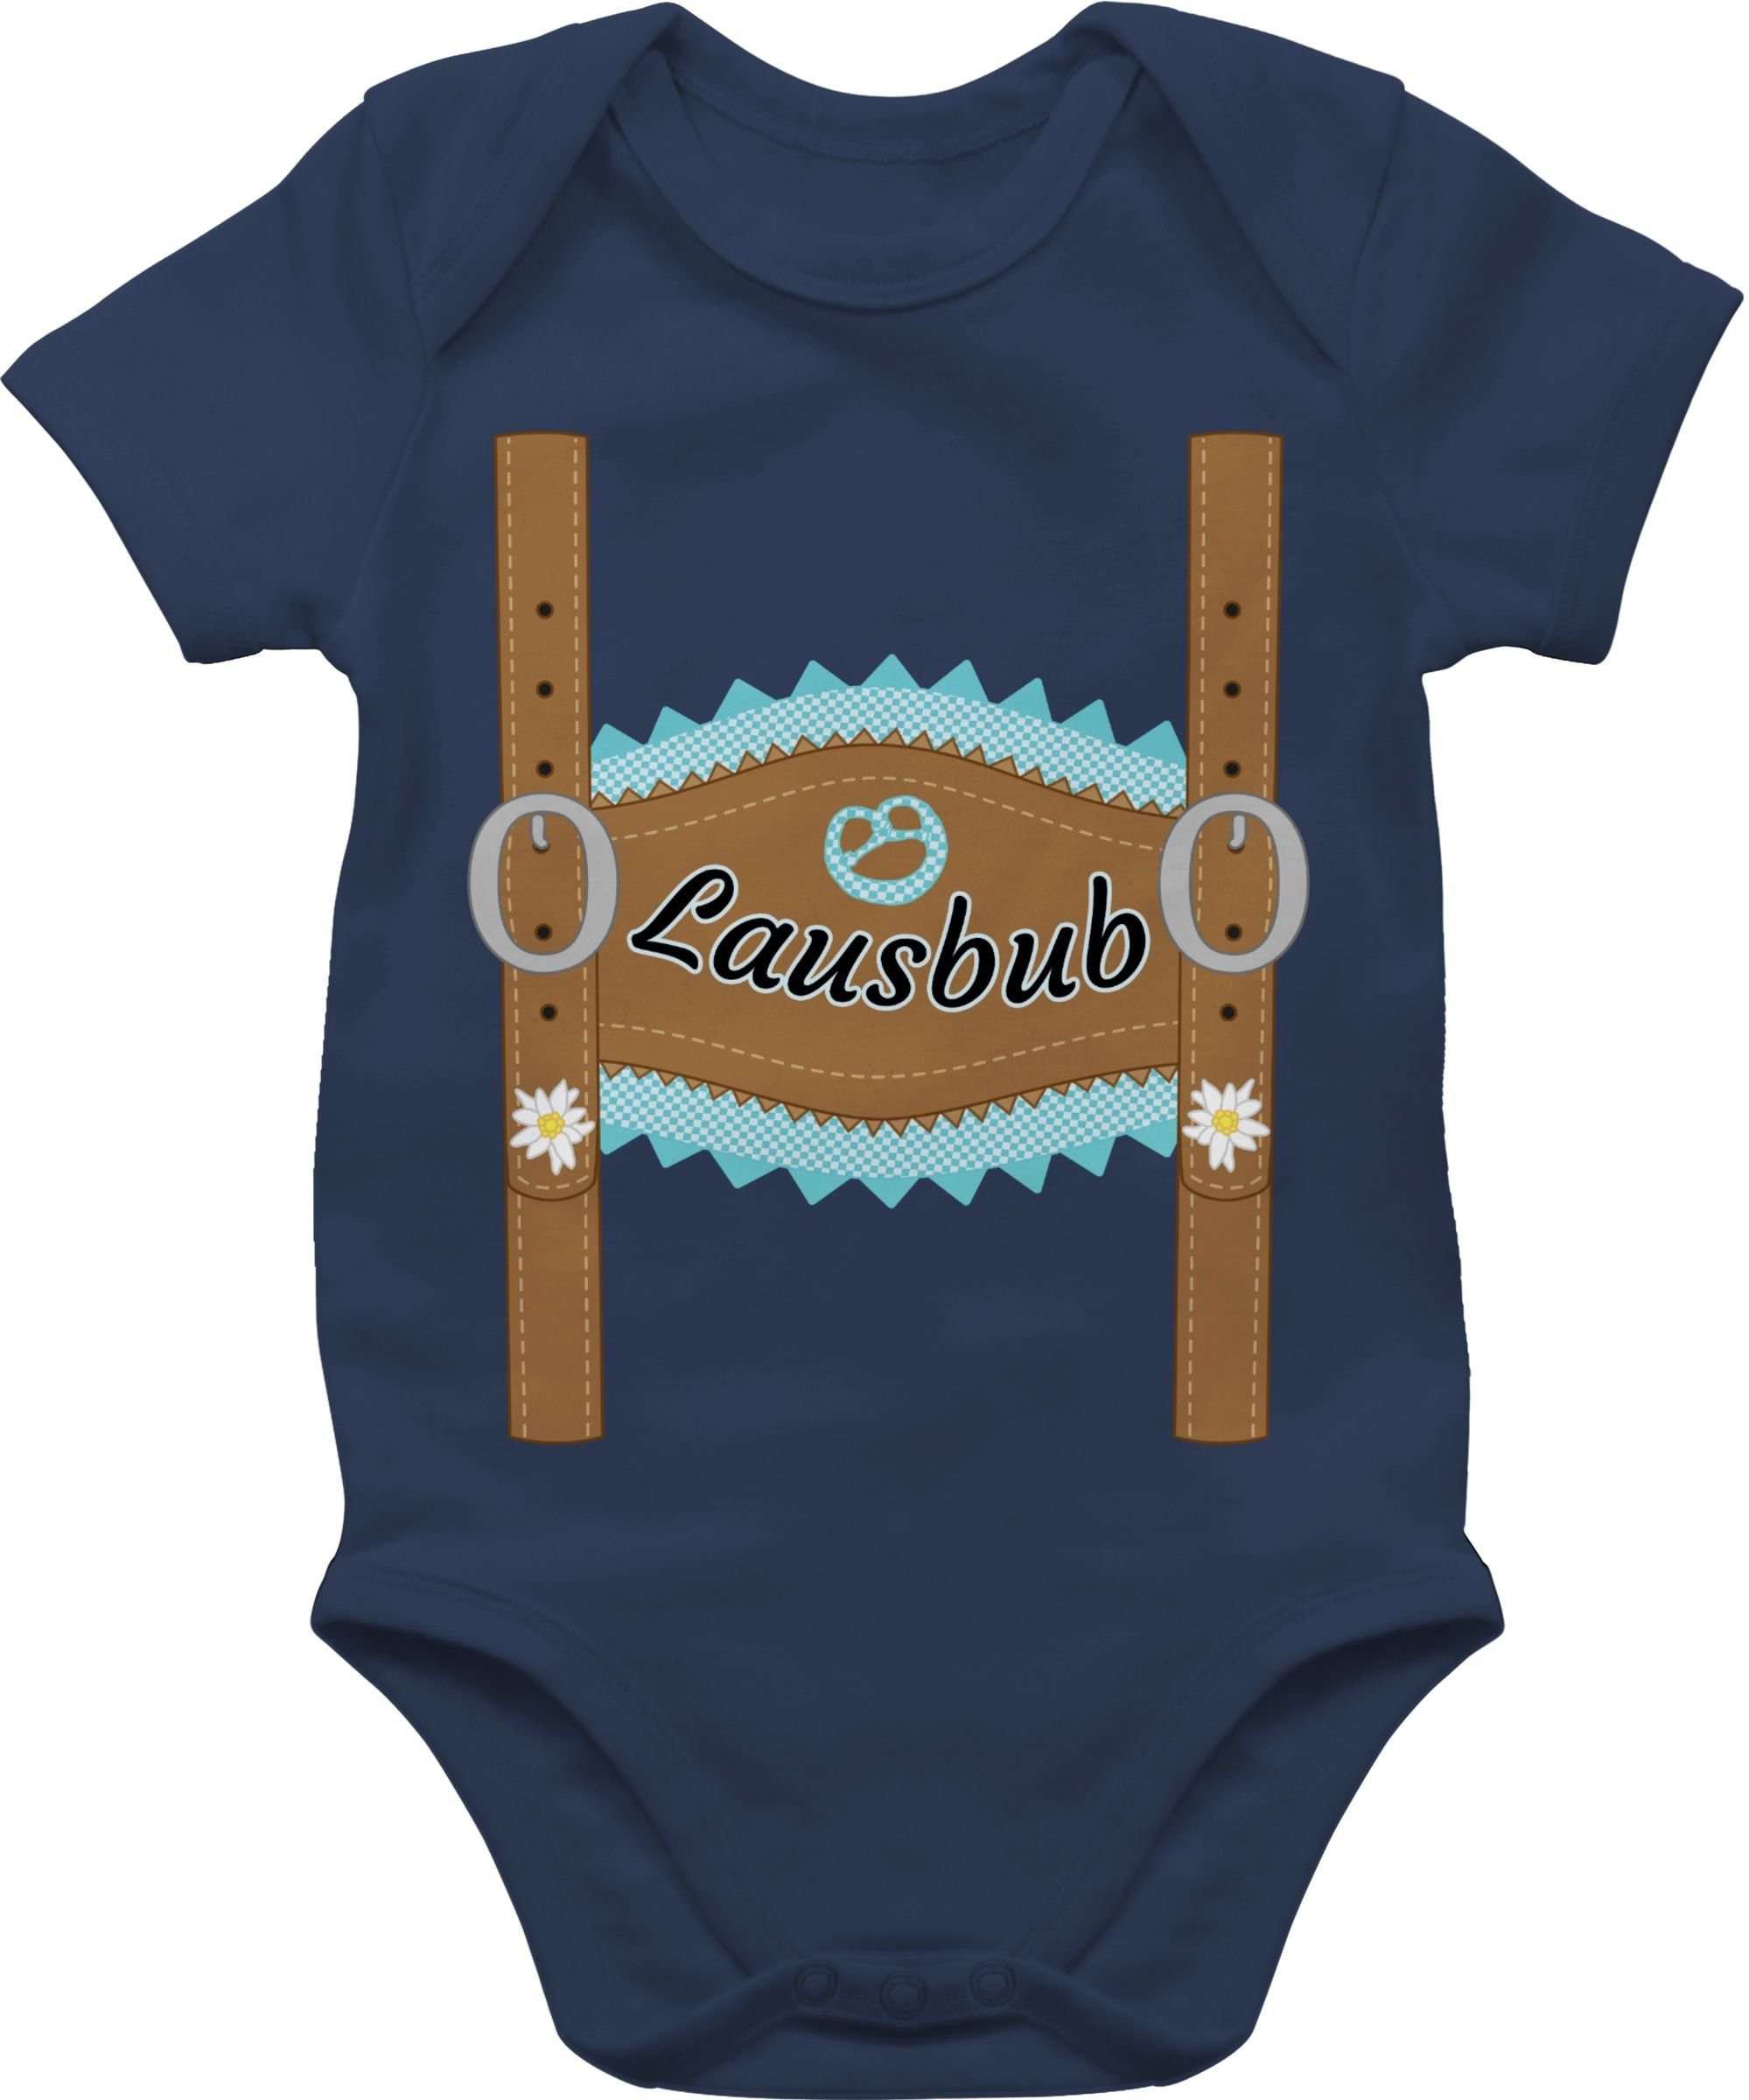 Shirtracer Shirtbody Lausbub Lederhose Mode für Oktoberfest Baby Outfit